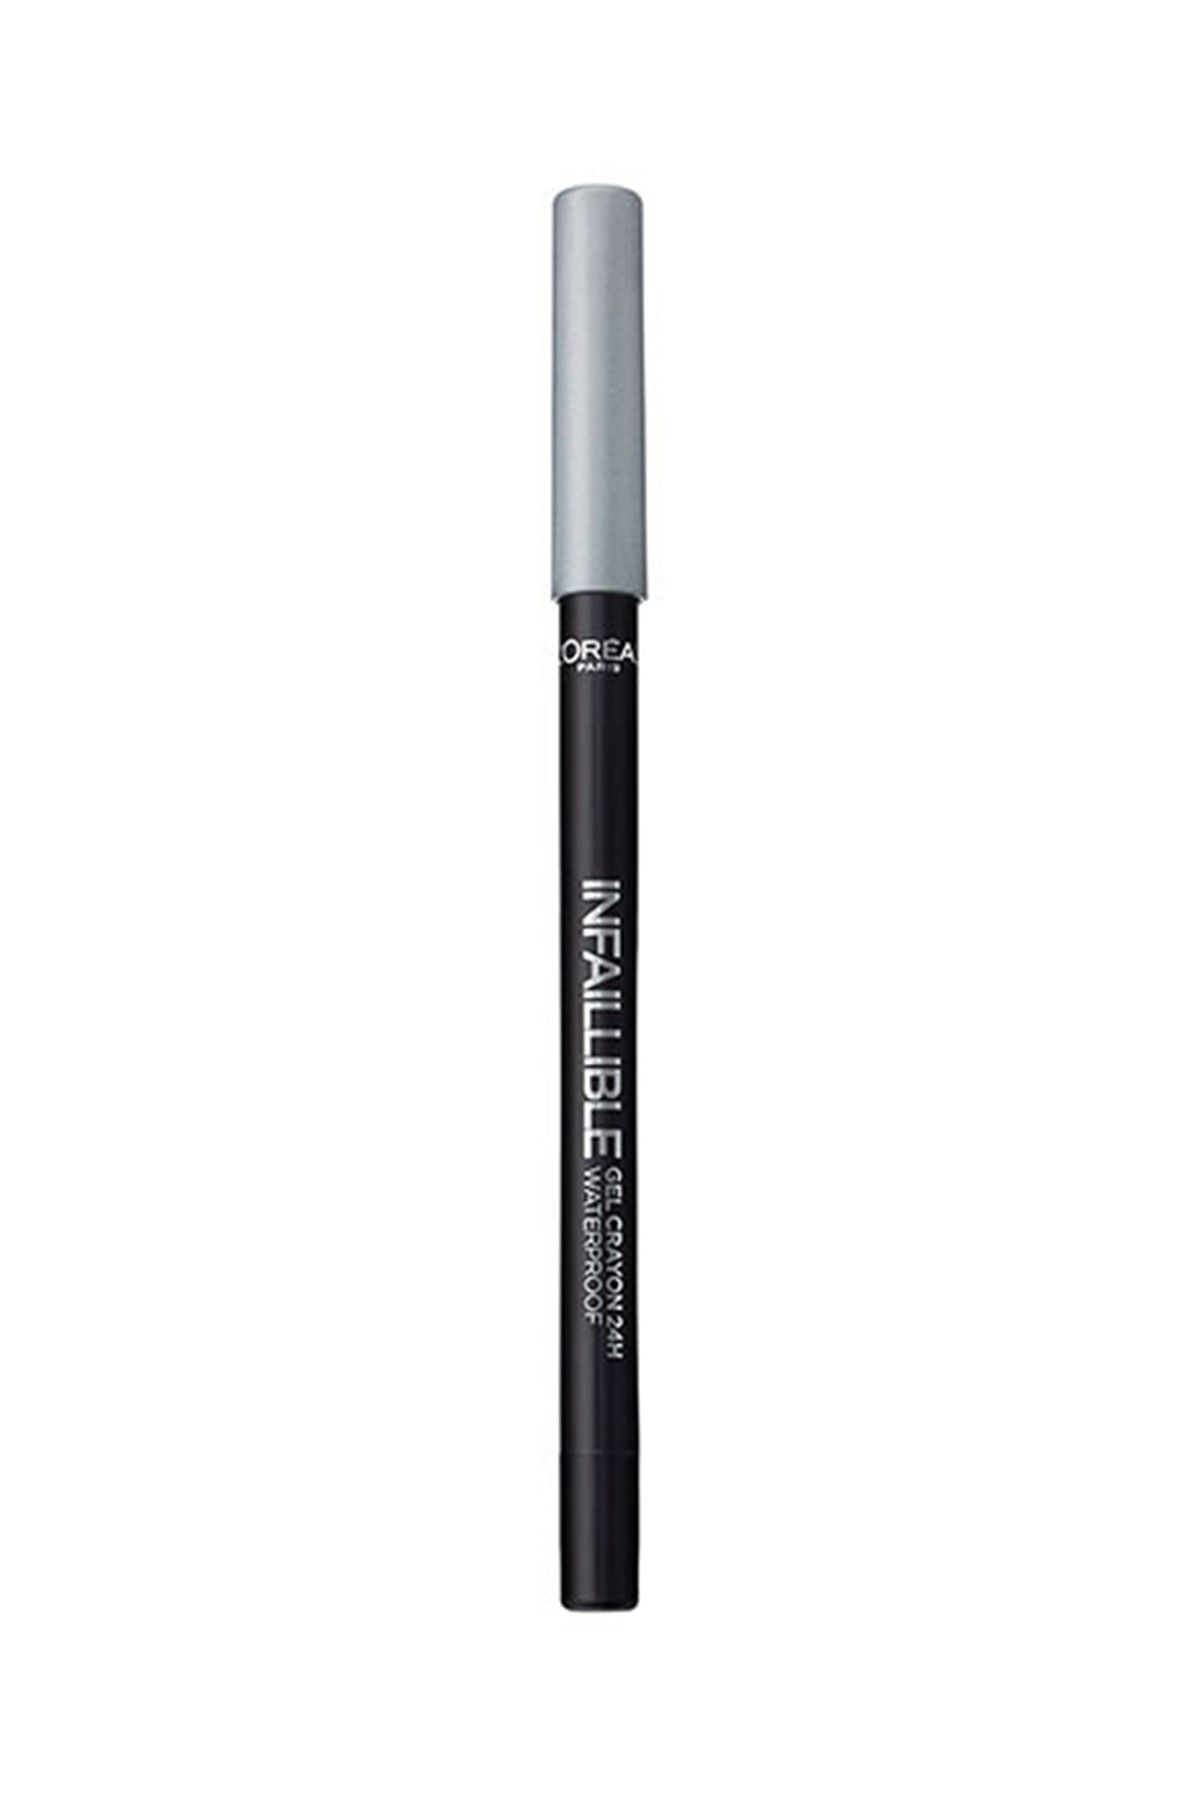 L'Oreal Paris Gri Eyeliner - Infallible Gel Crayon Eyeliner 02 Grey 3600523351619